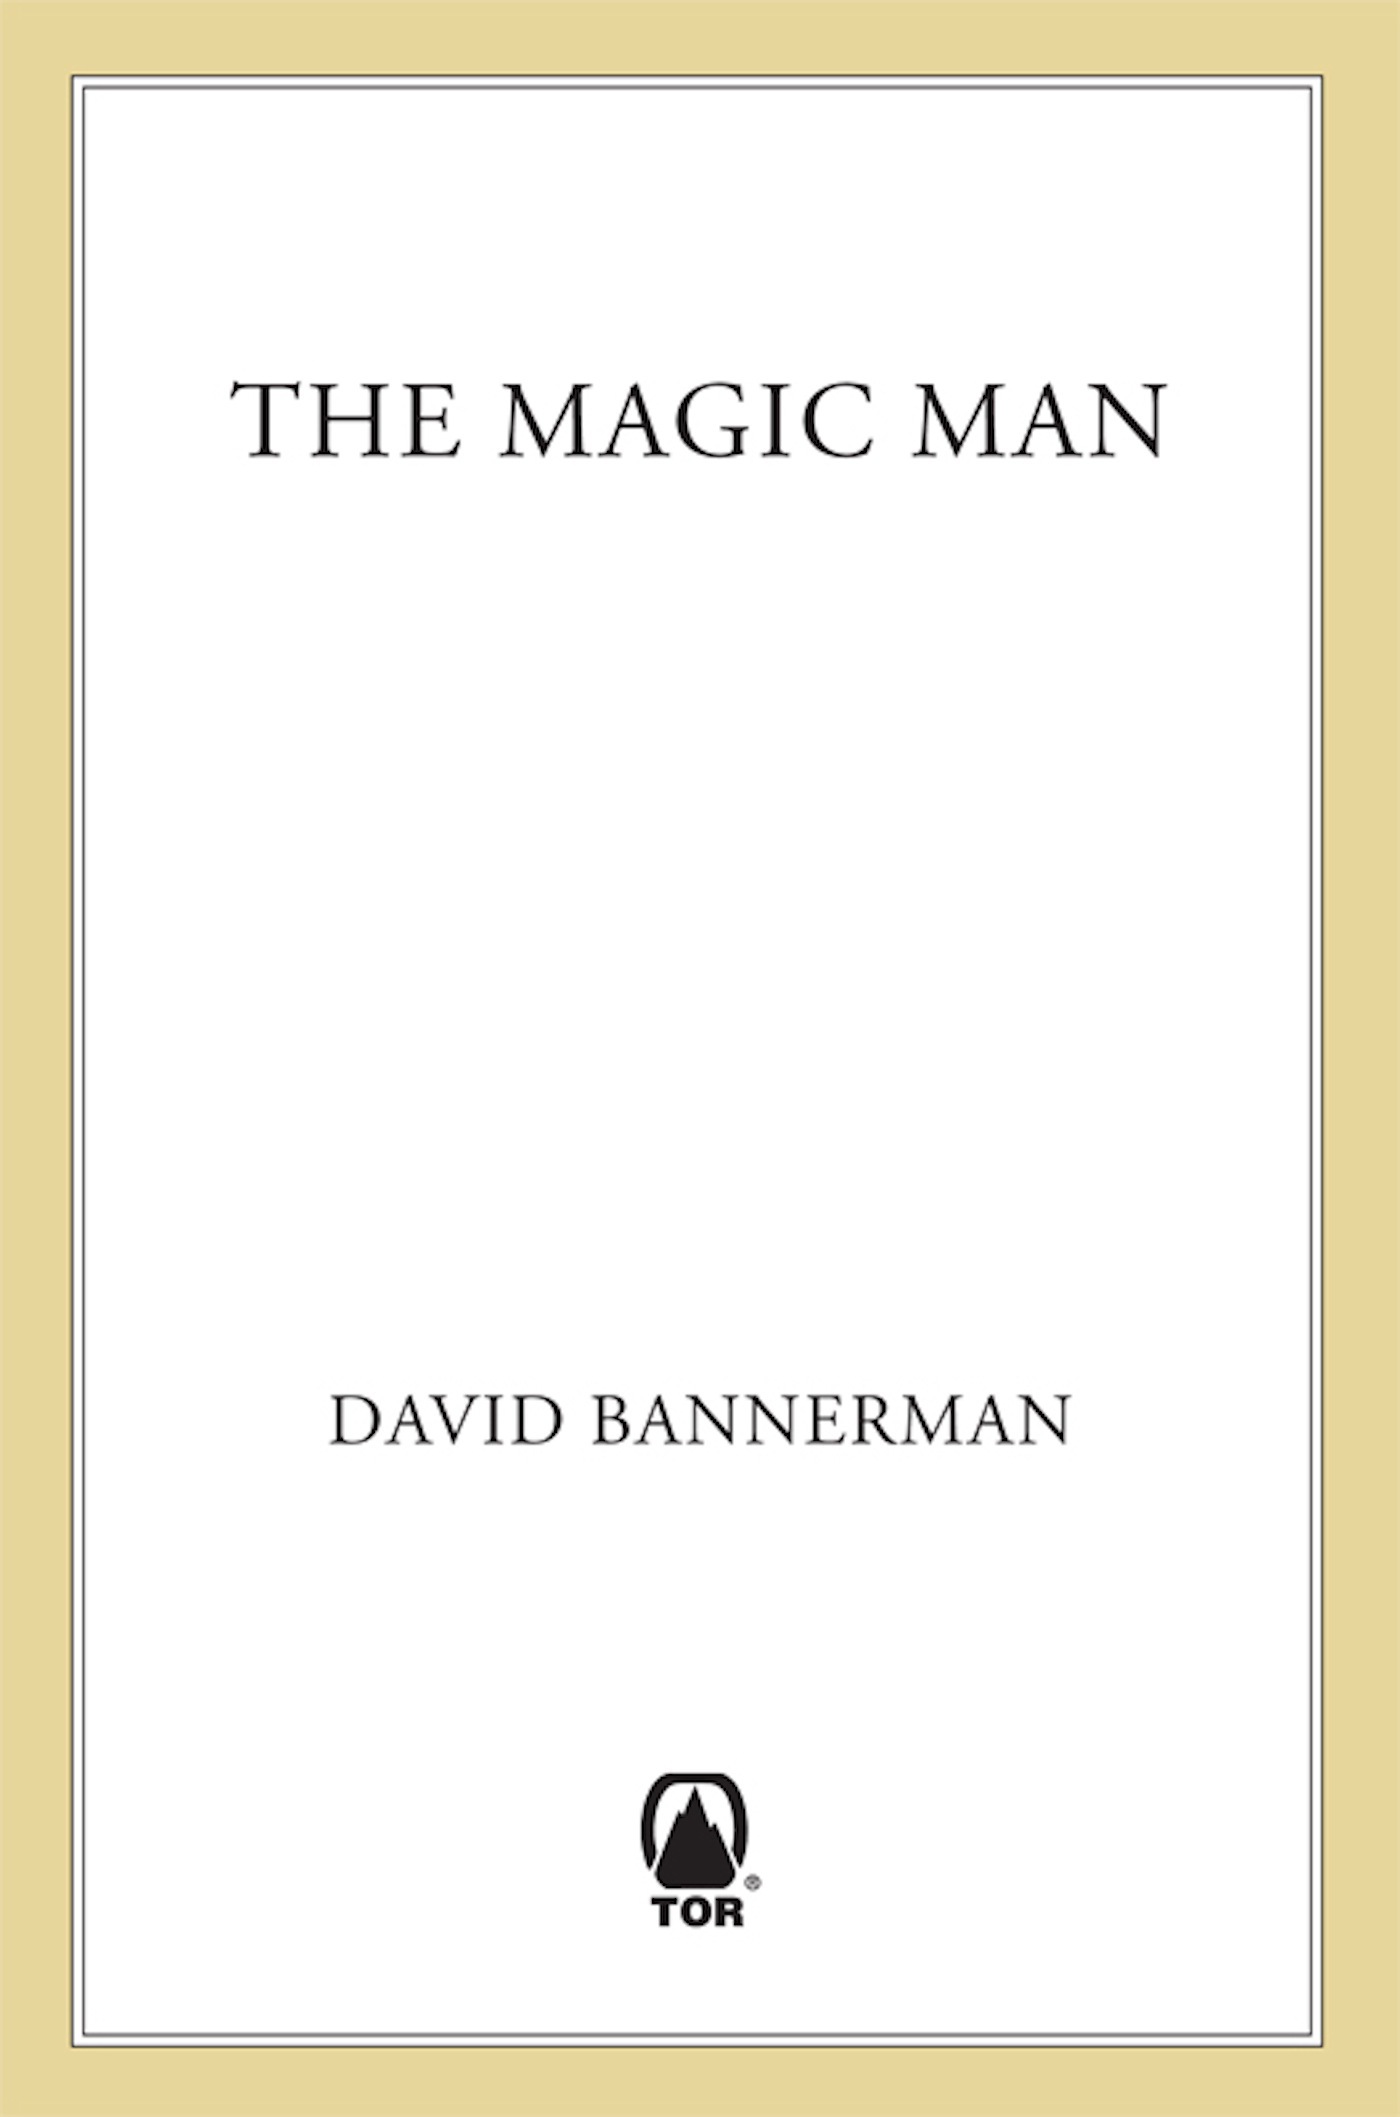 The Magic Man by David Bannerman